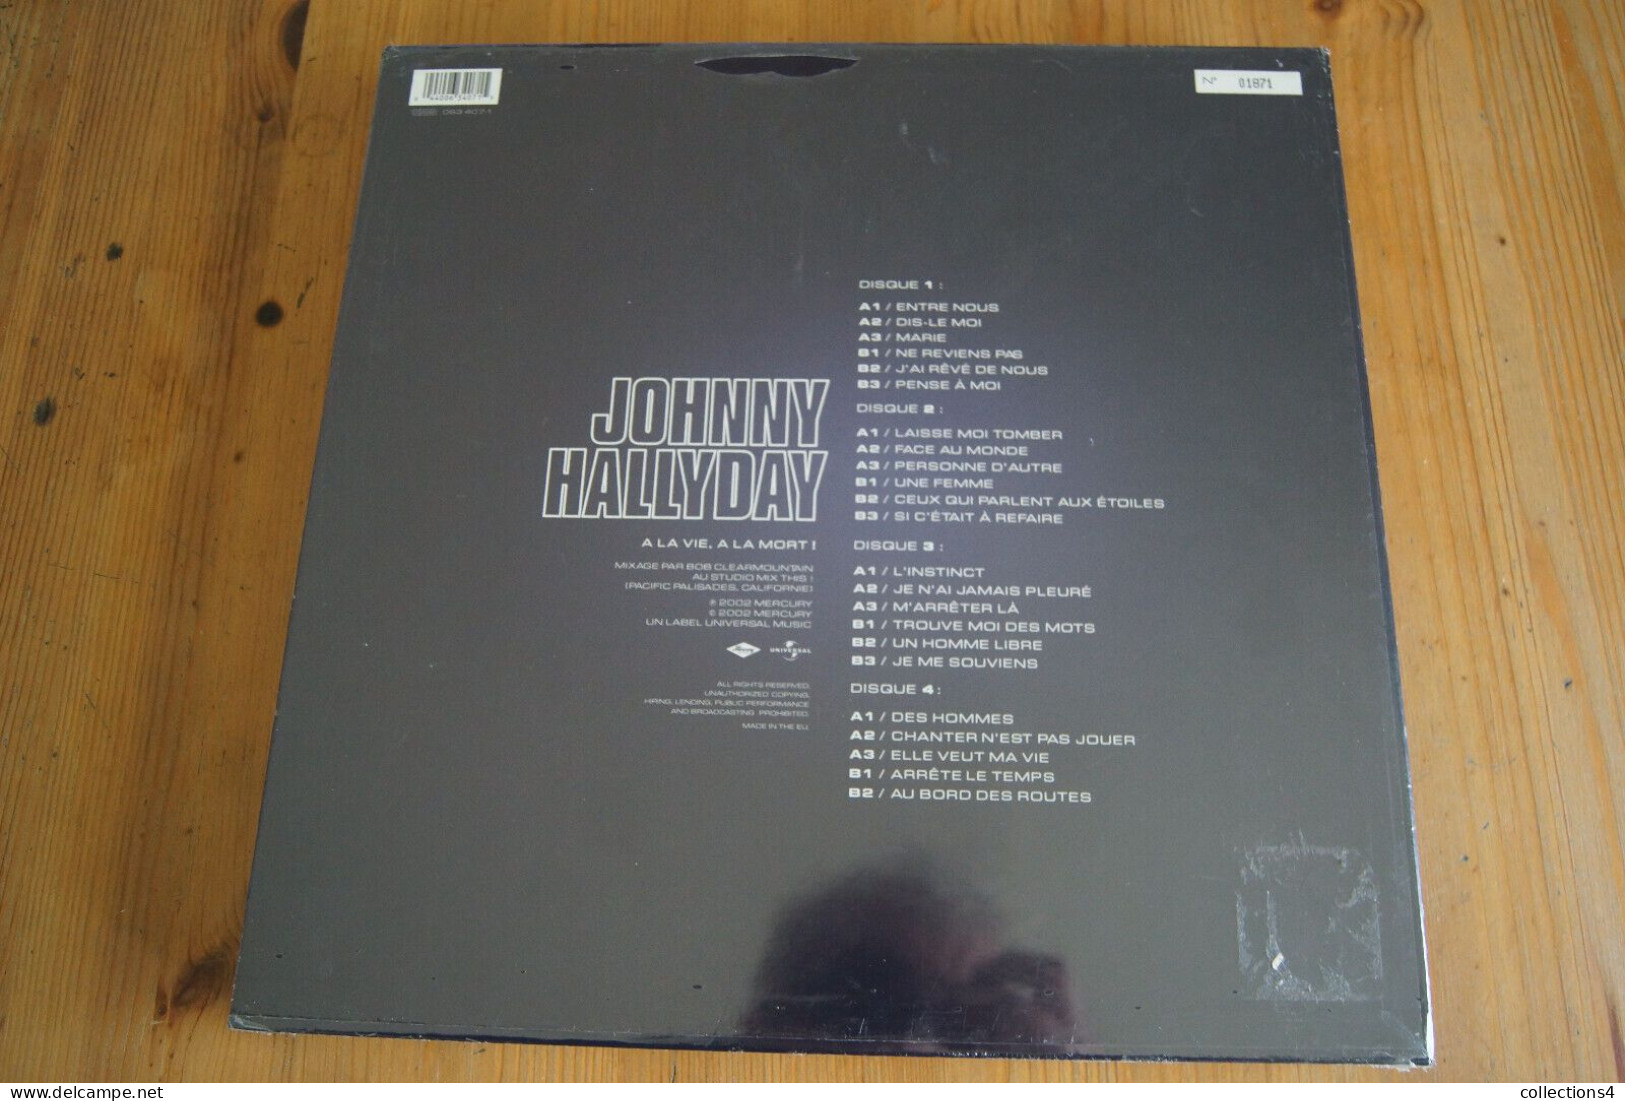 JOHNNY HALLYDAY COFFRET PRESTIGE 4 LP NEUF SCELLE NUMEROTEE + CERTIFICAT VALEUR+ - Rock